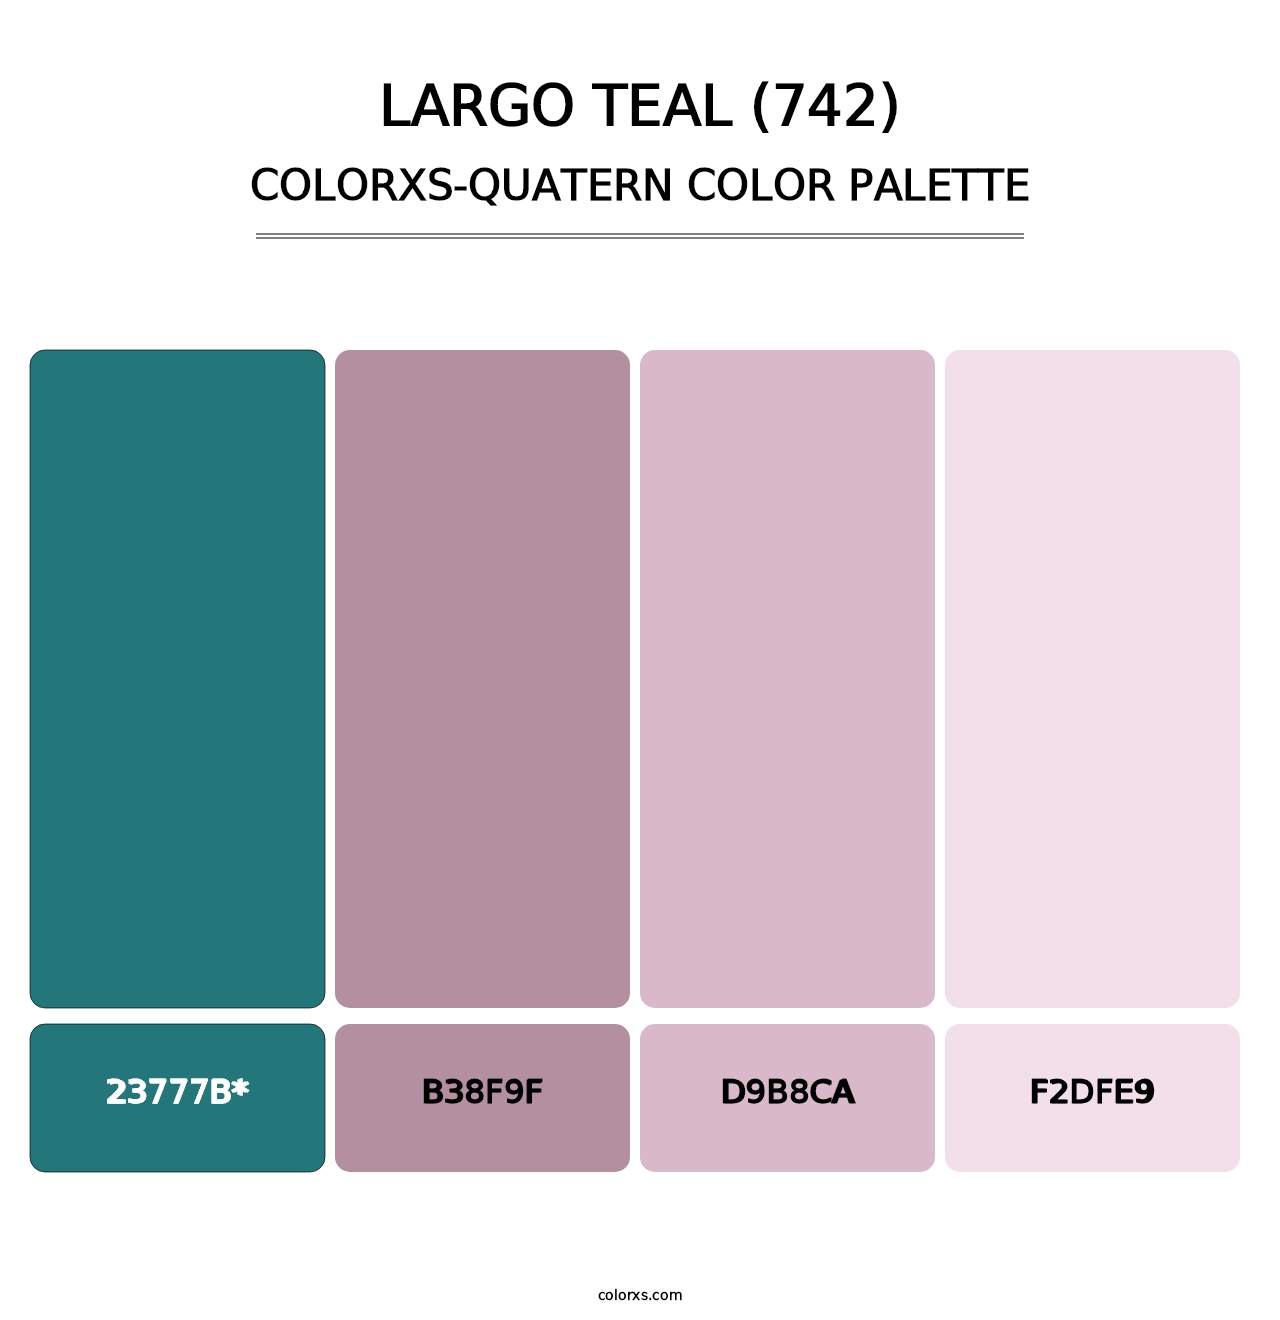 Largo Teal (742) - Colorxs Quatern Palette